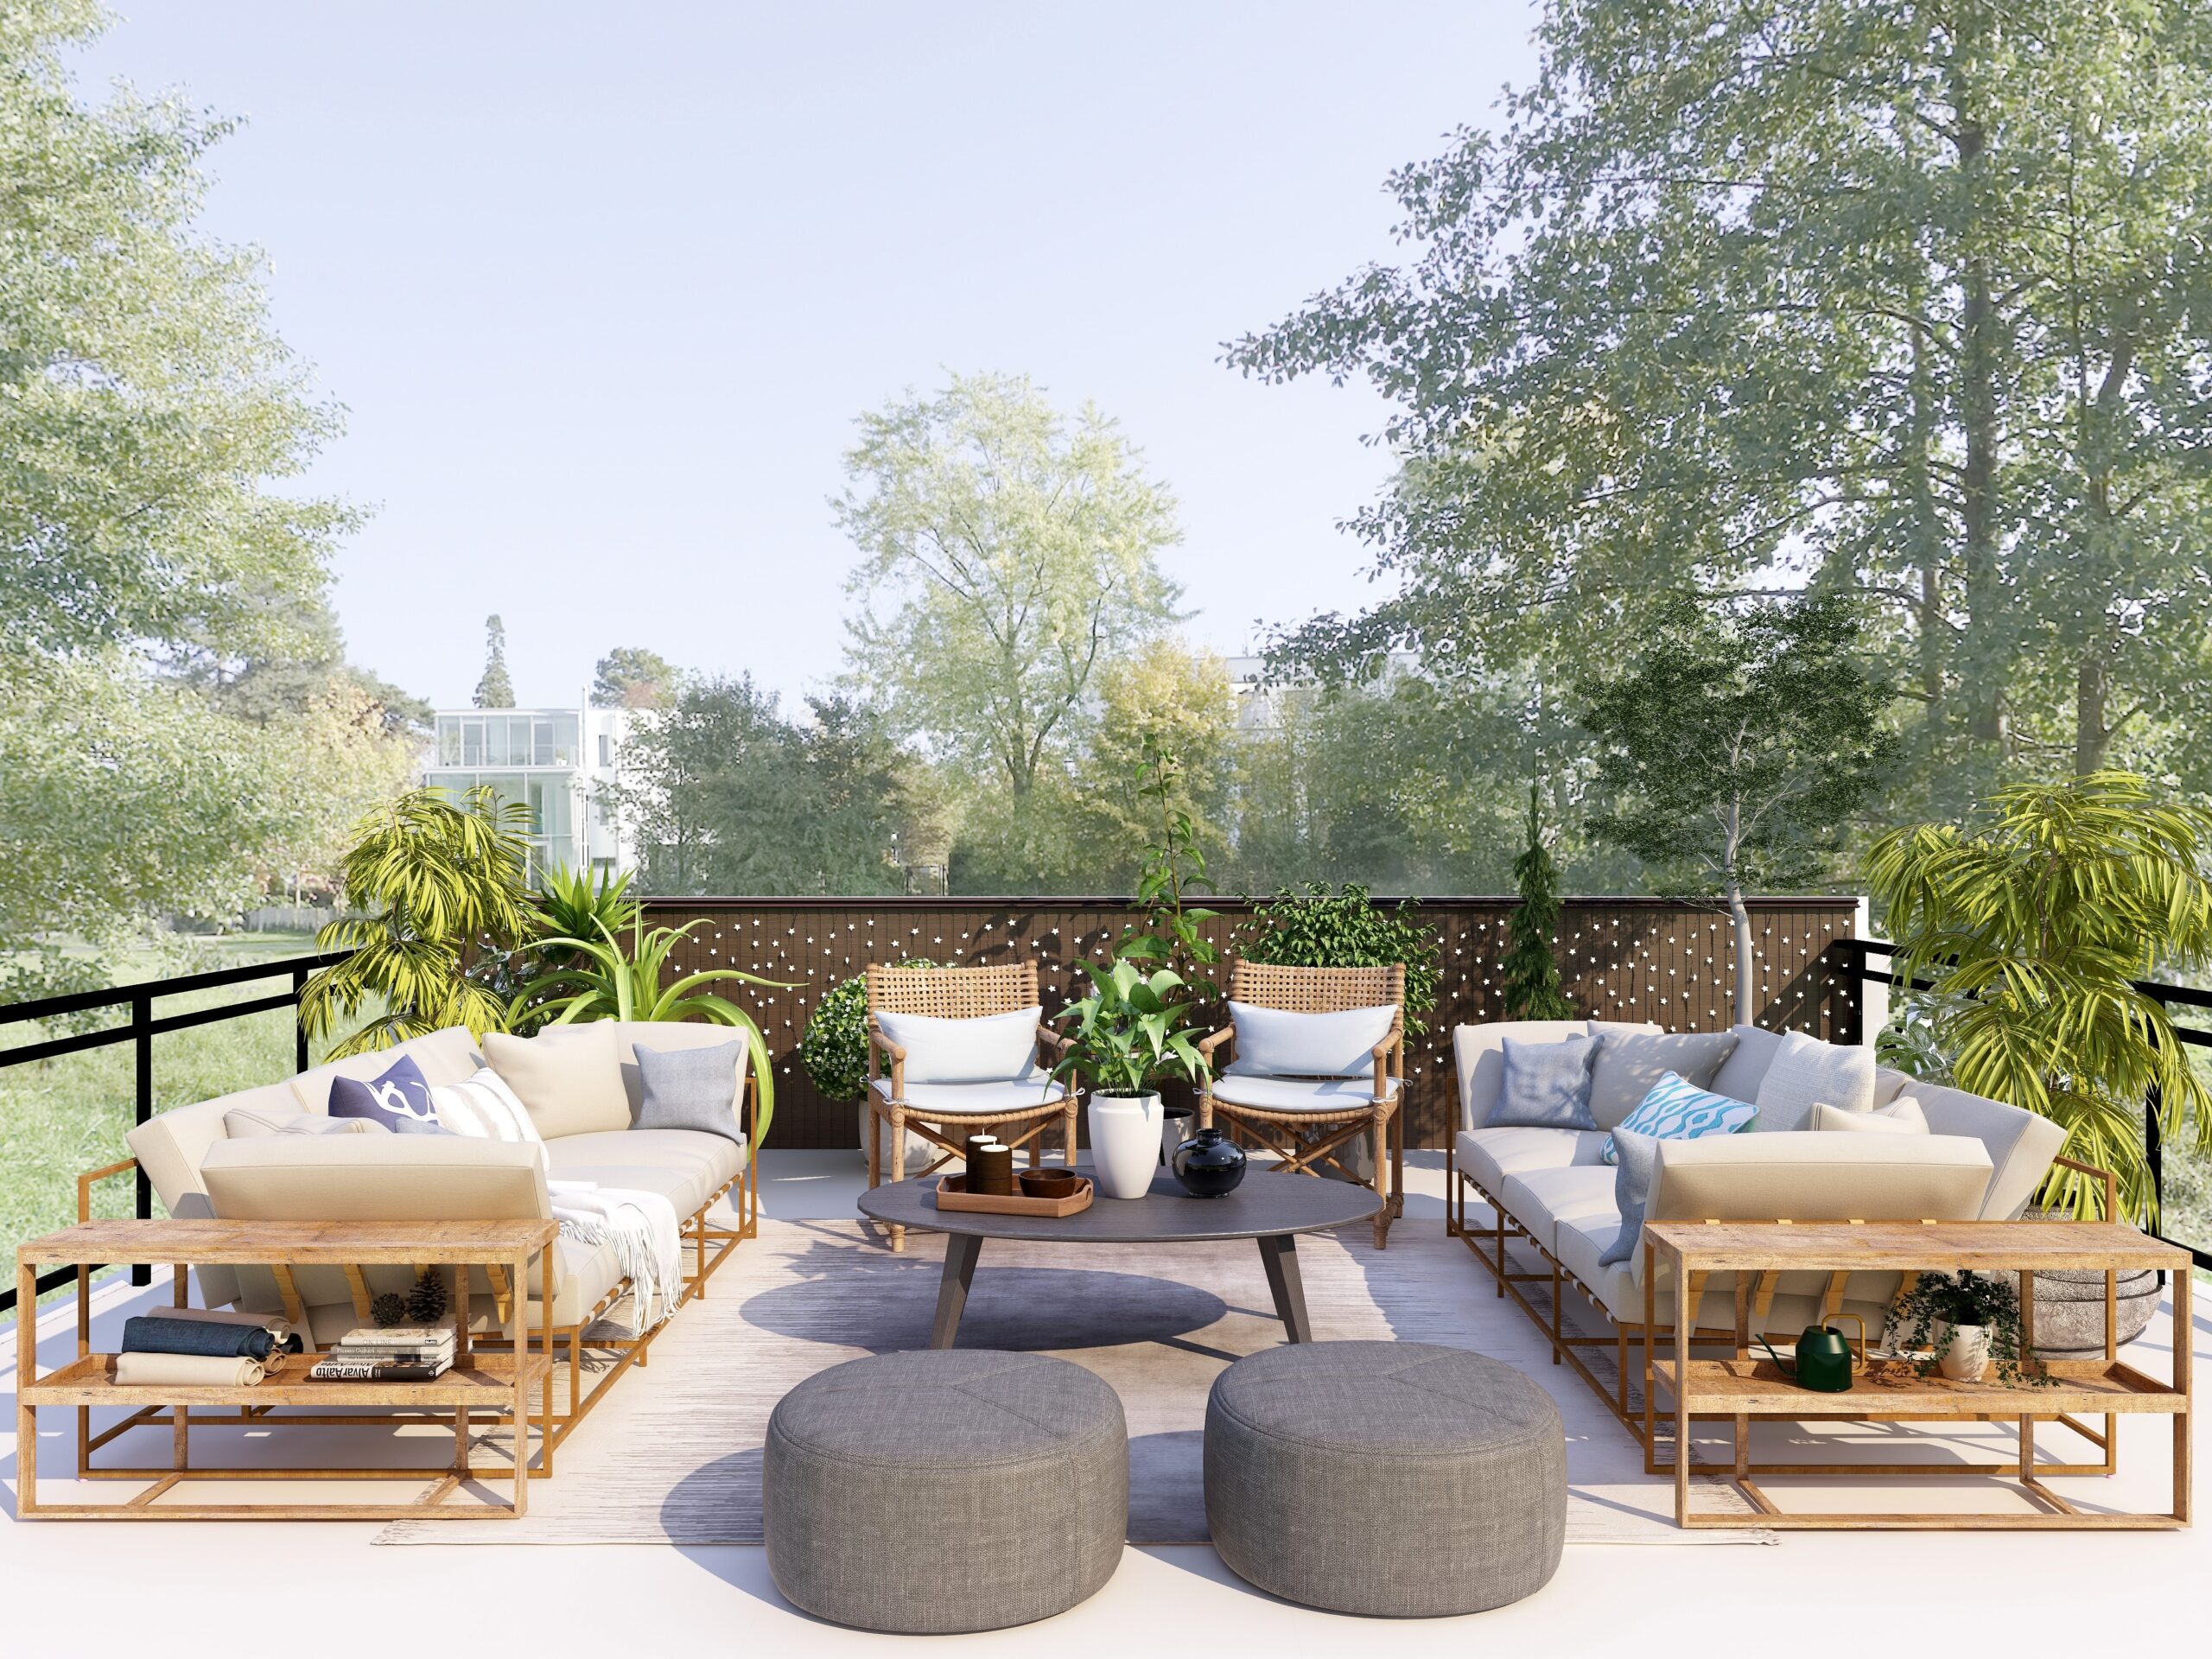 Luxury Outdoor Design: An Oasis in Your Backyard